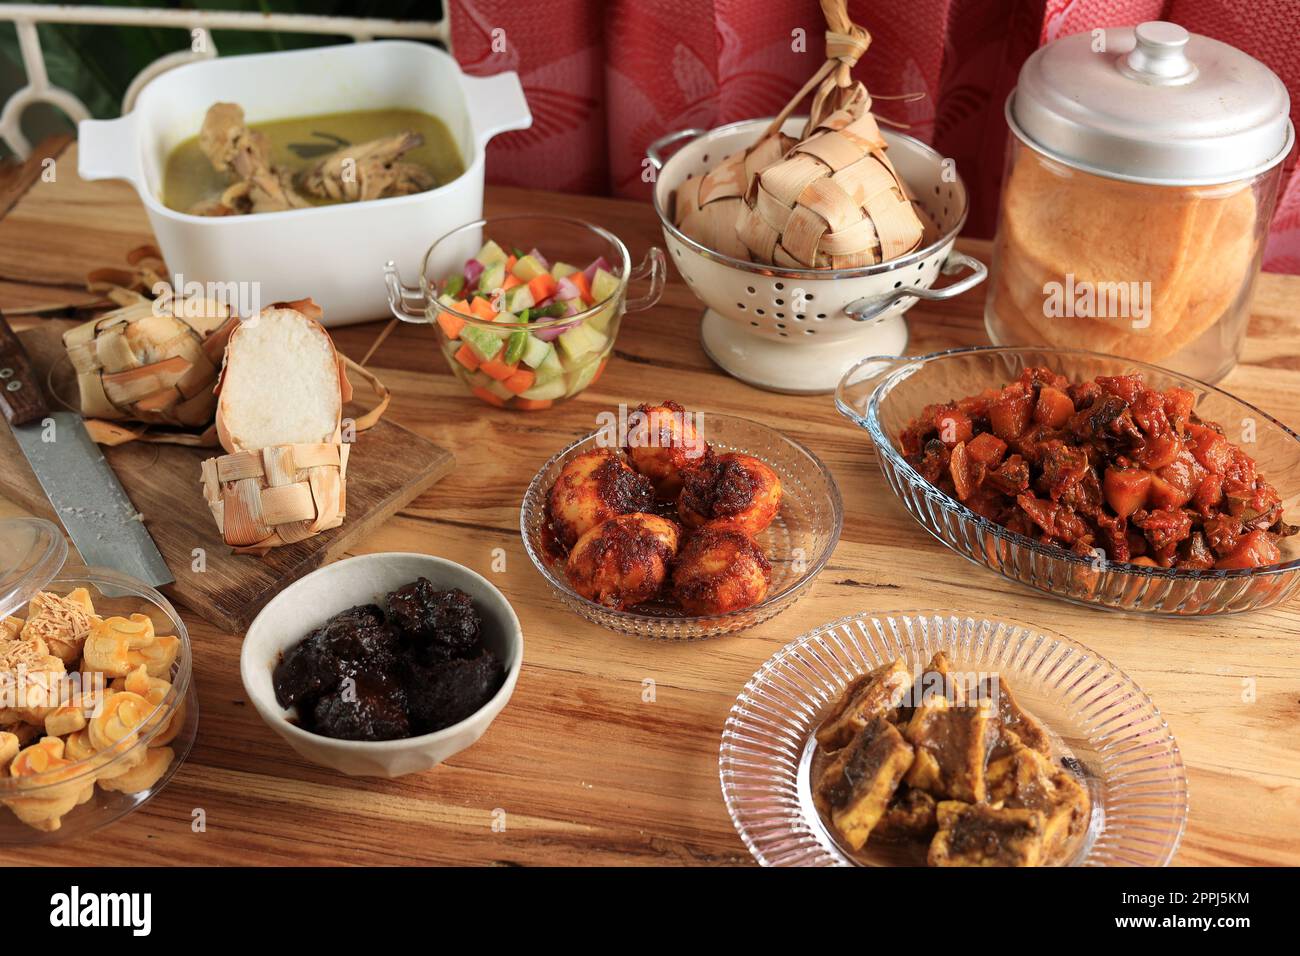 Hidangan Lebaran Menu Set with Ketupat, Rendang, Semur Tahu, Opor Ayam Chicken Curry, Shrimp Crackers, and Sambal Goreng Ati Kentang. Ied Al Fitr Fest Stock Photo